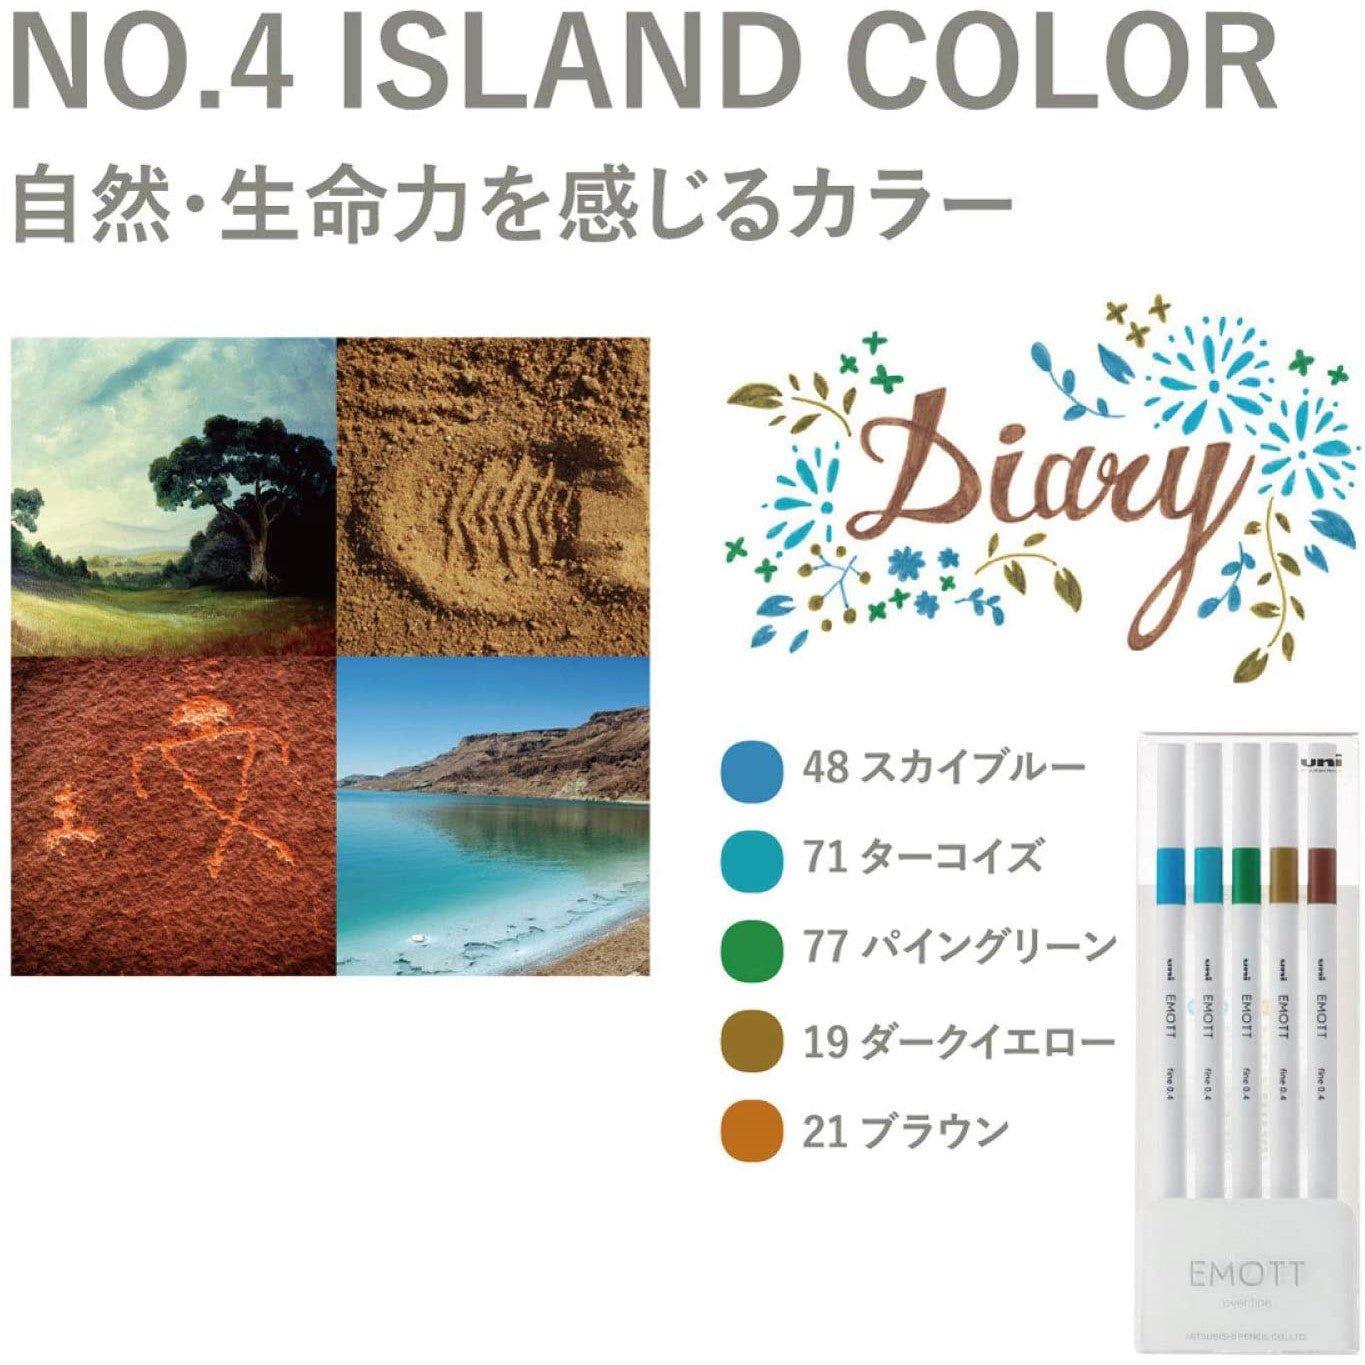 UNI PEMSY5C signature pen Sharpie marker EMOTT 5 color water-based pen - CHL-STORE 